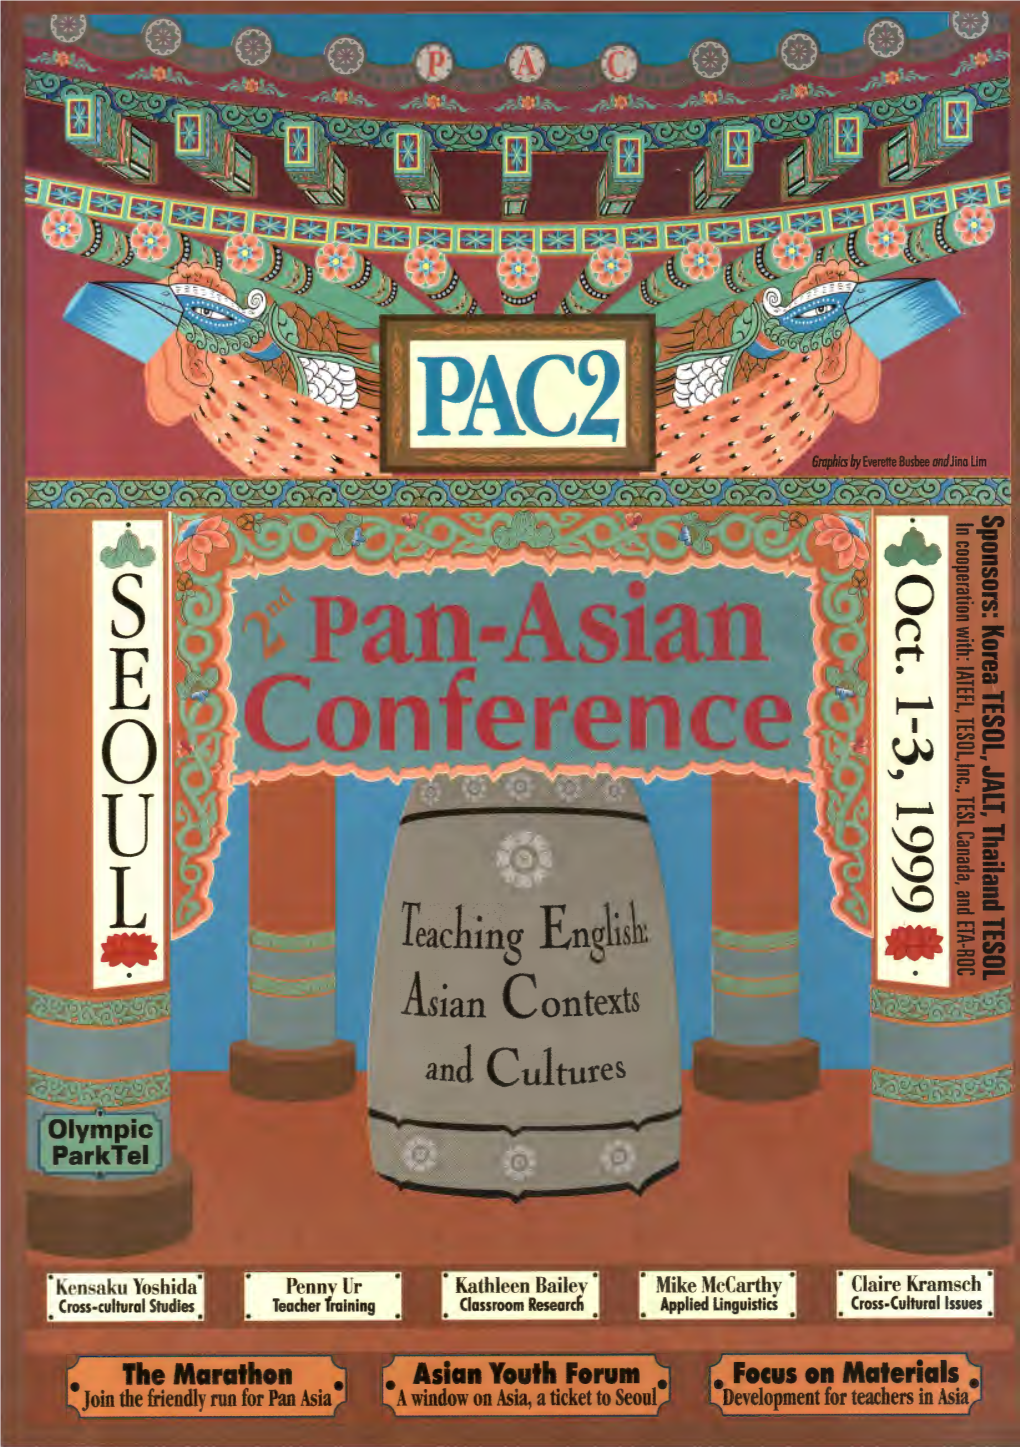 Conference Program Book (Scanned)